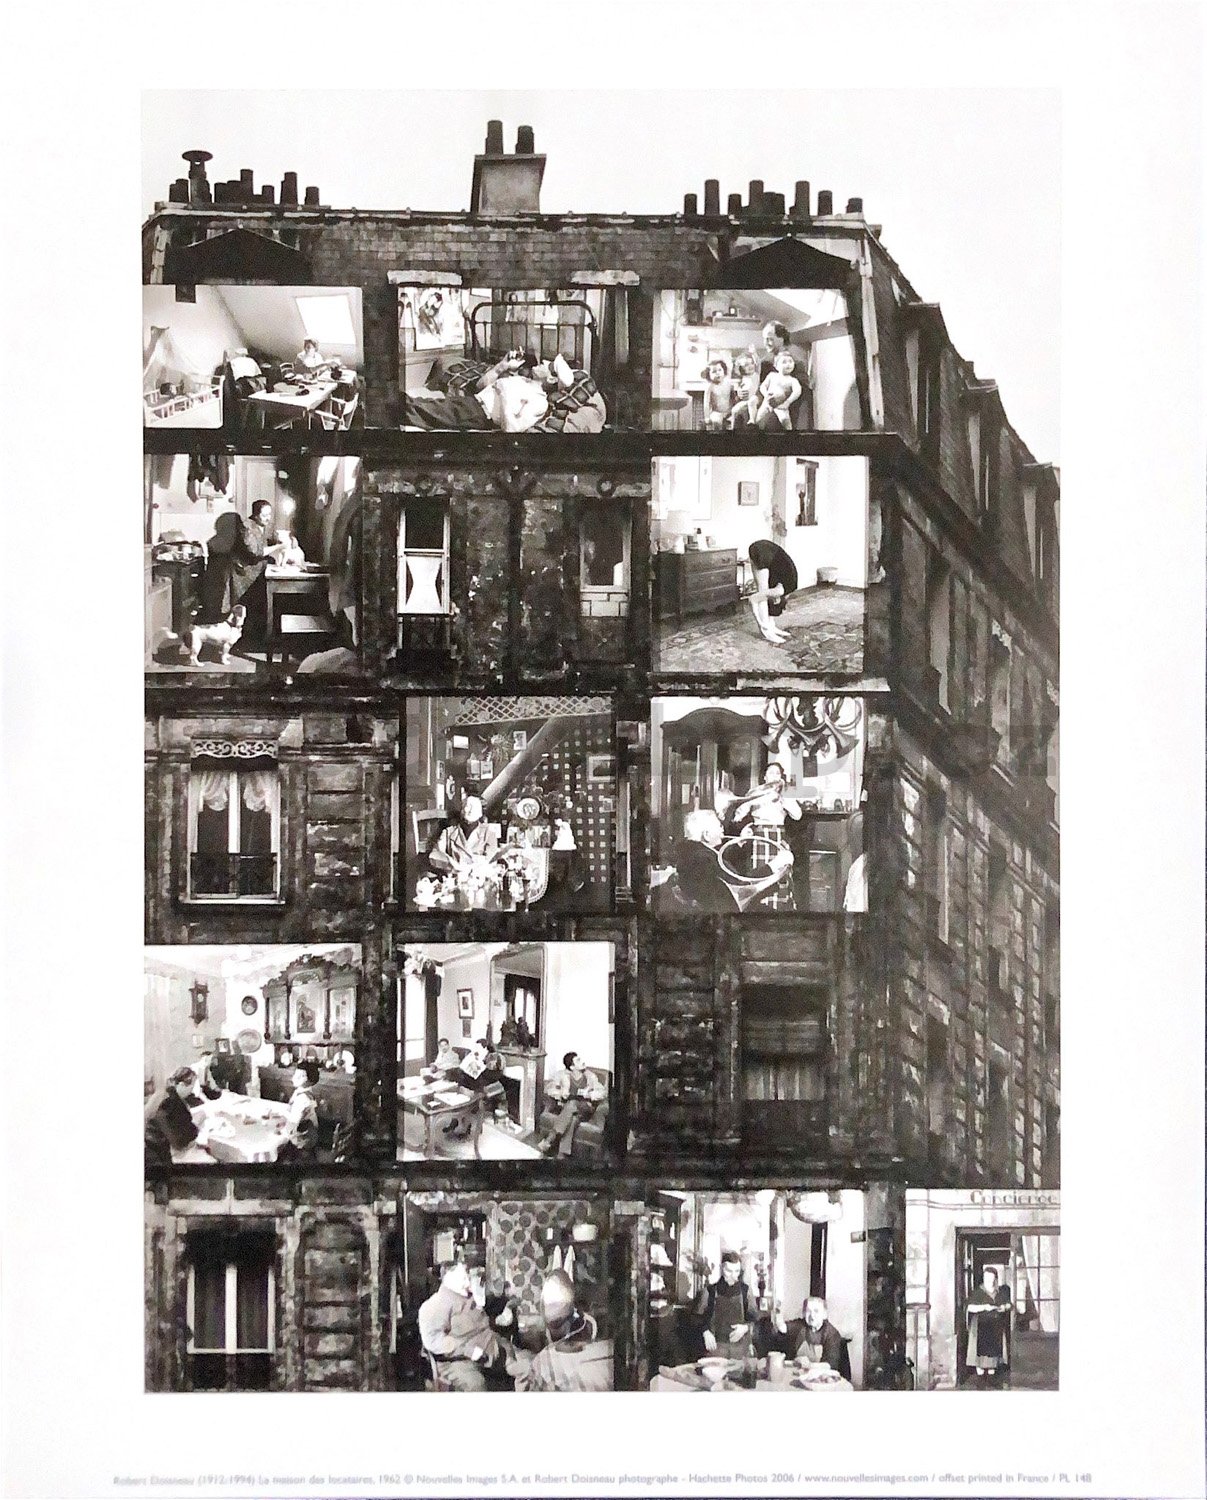 Robert Doisneau - Tenement house - 24x30cm